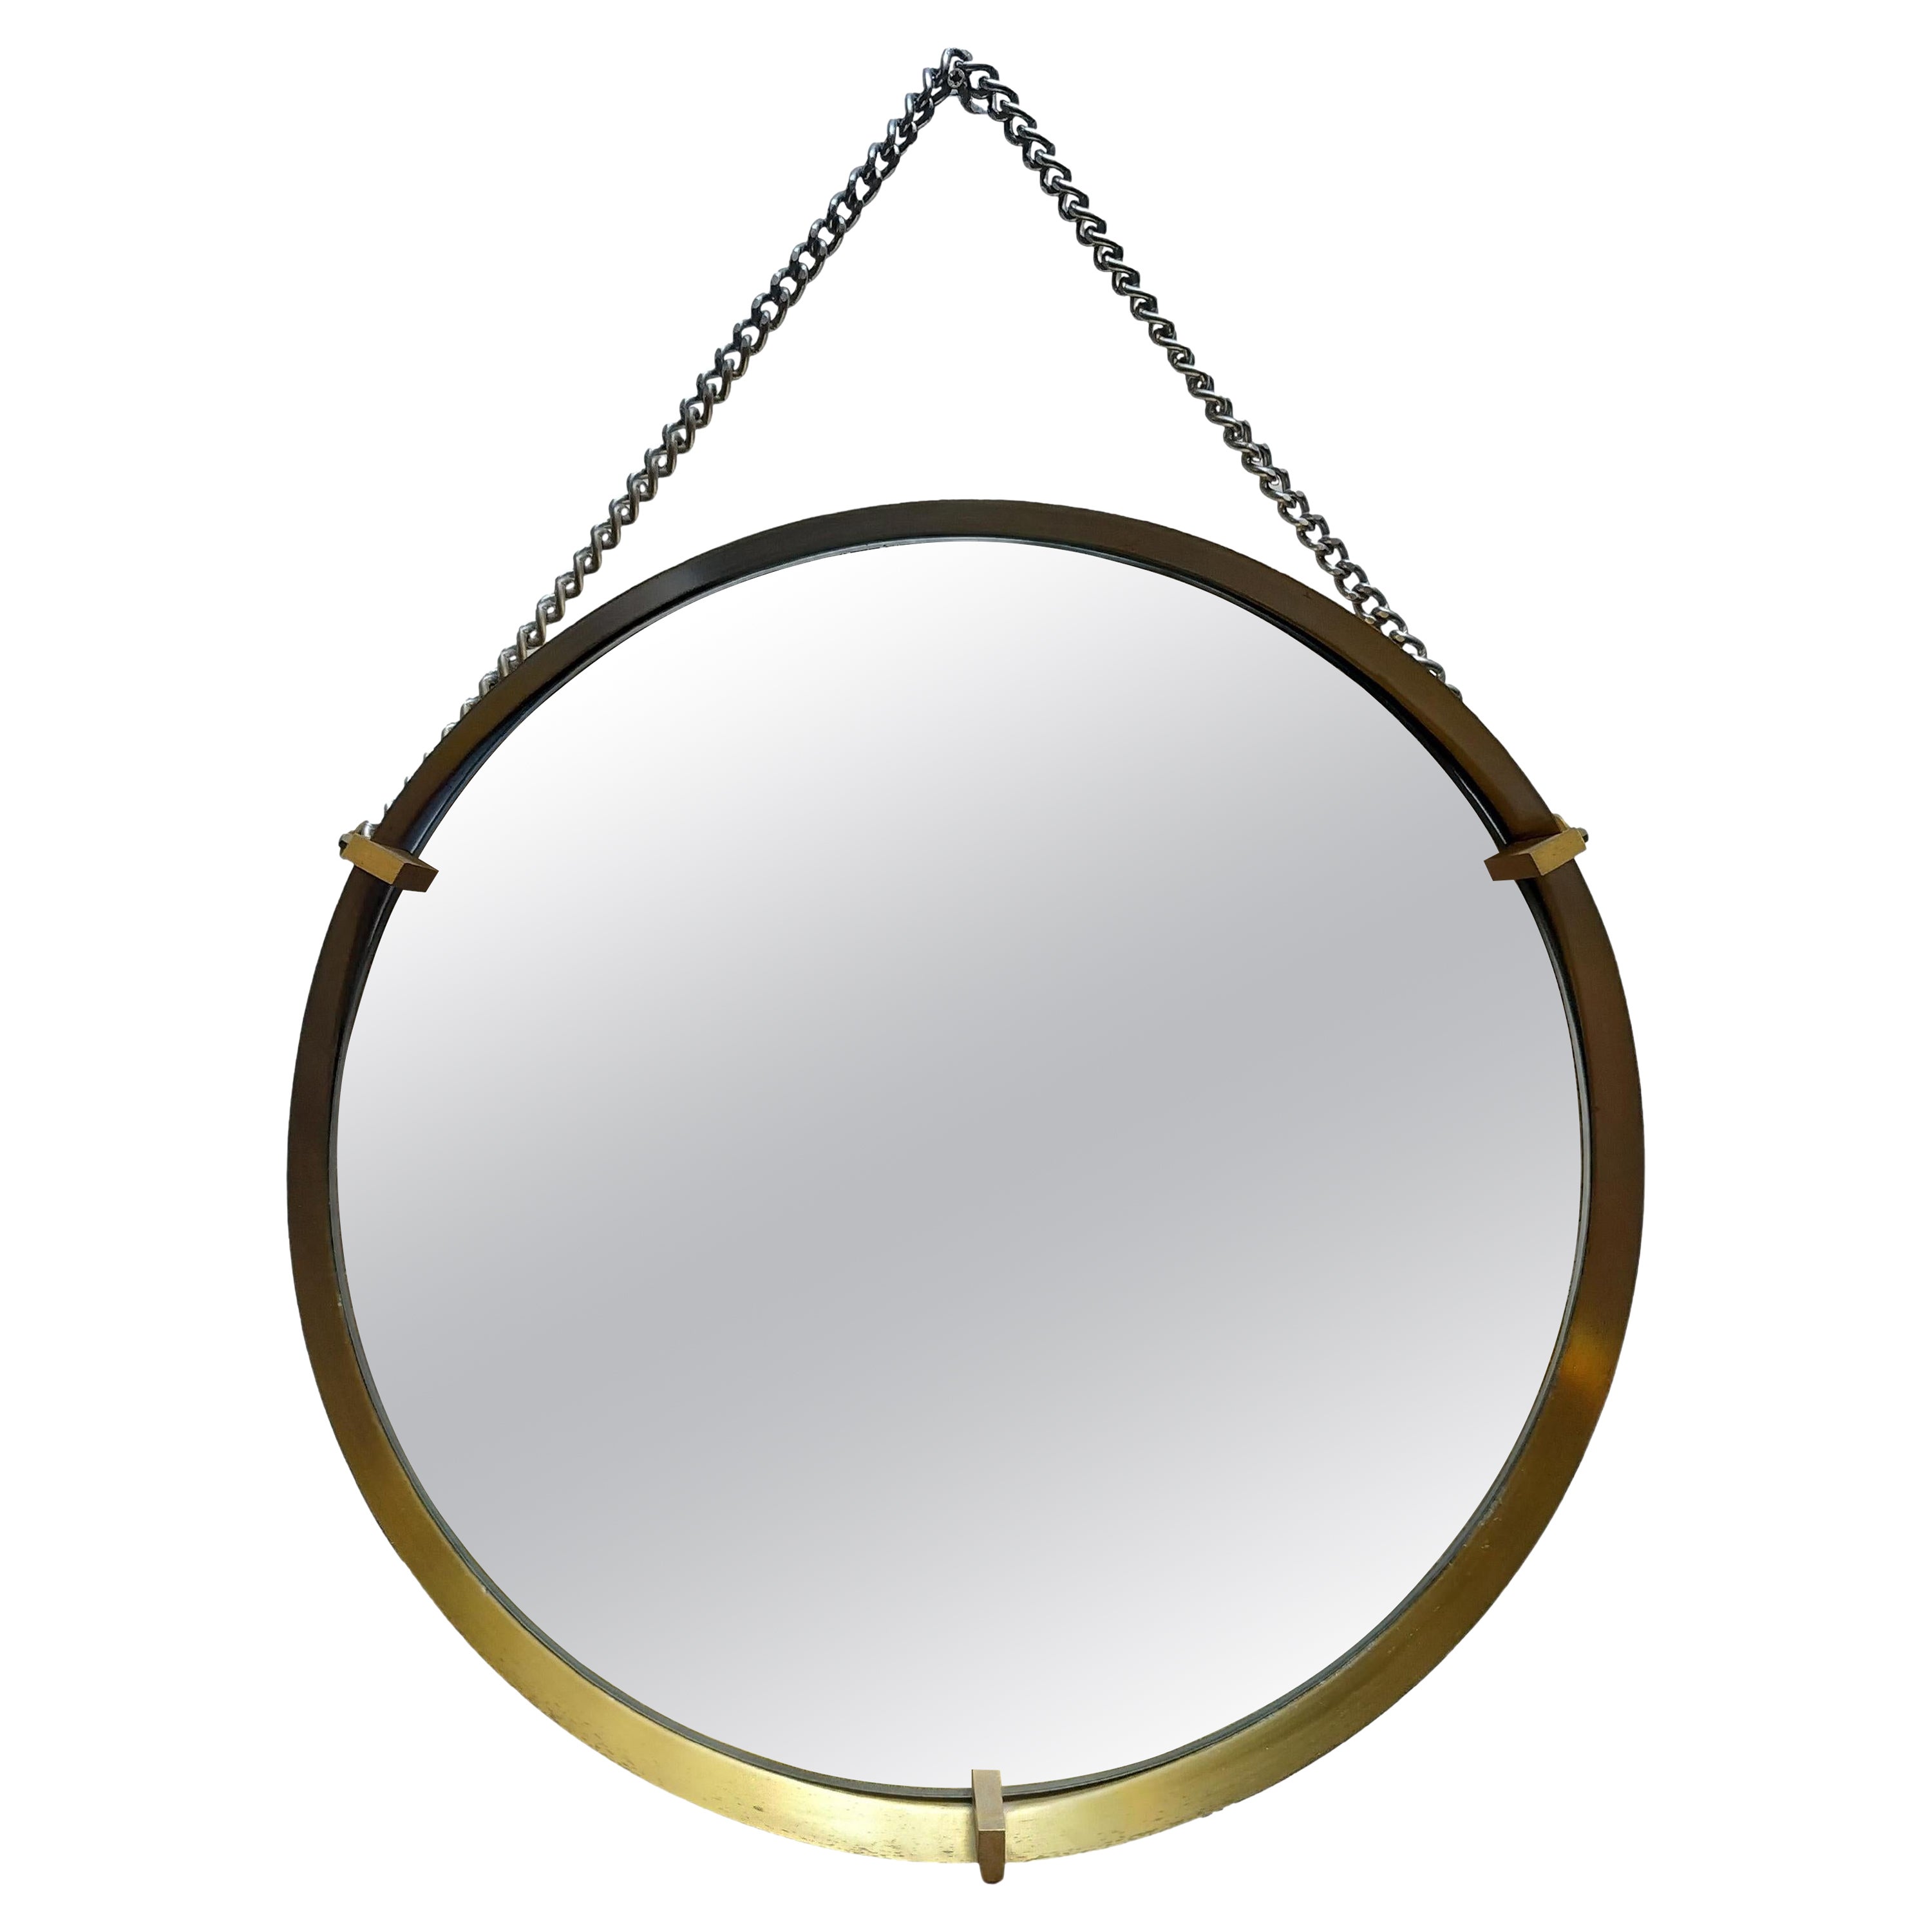 Santambrogio & De Berti Brass Circular Wall Mirror Italy 1960s For Sale